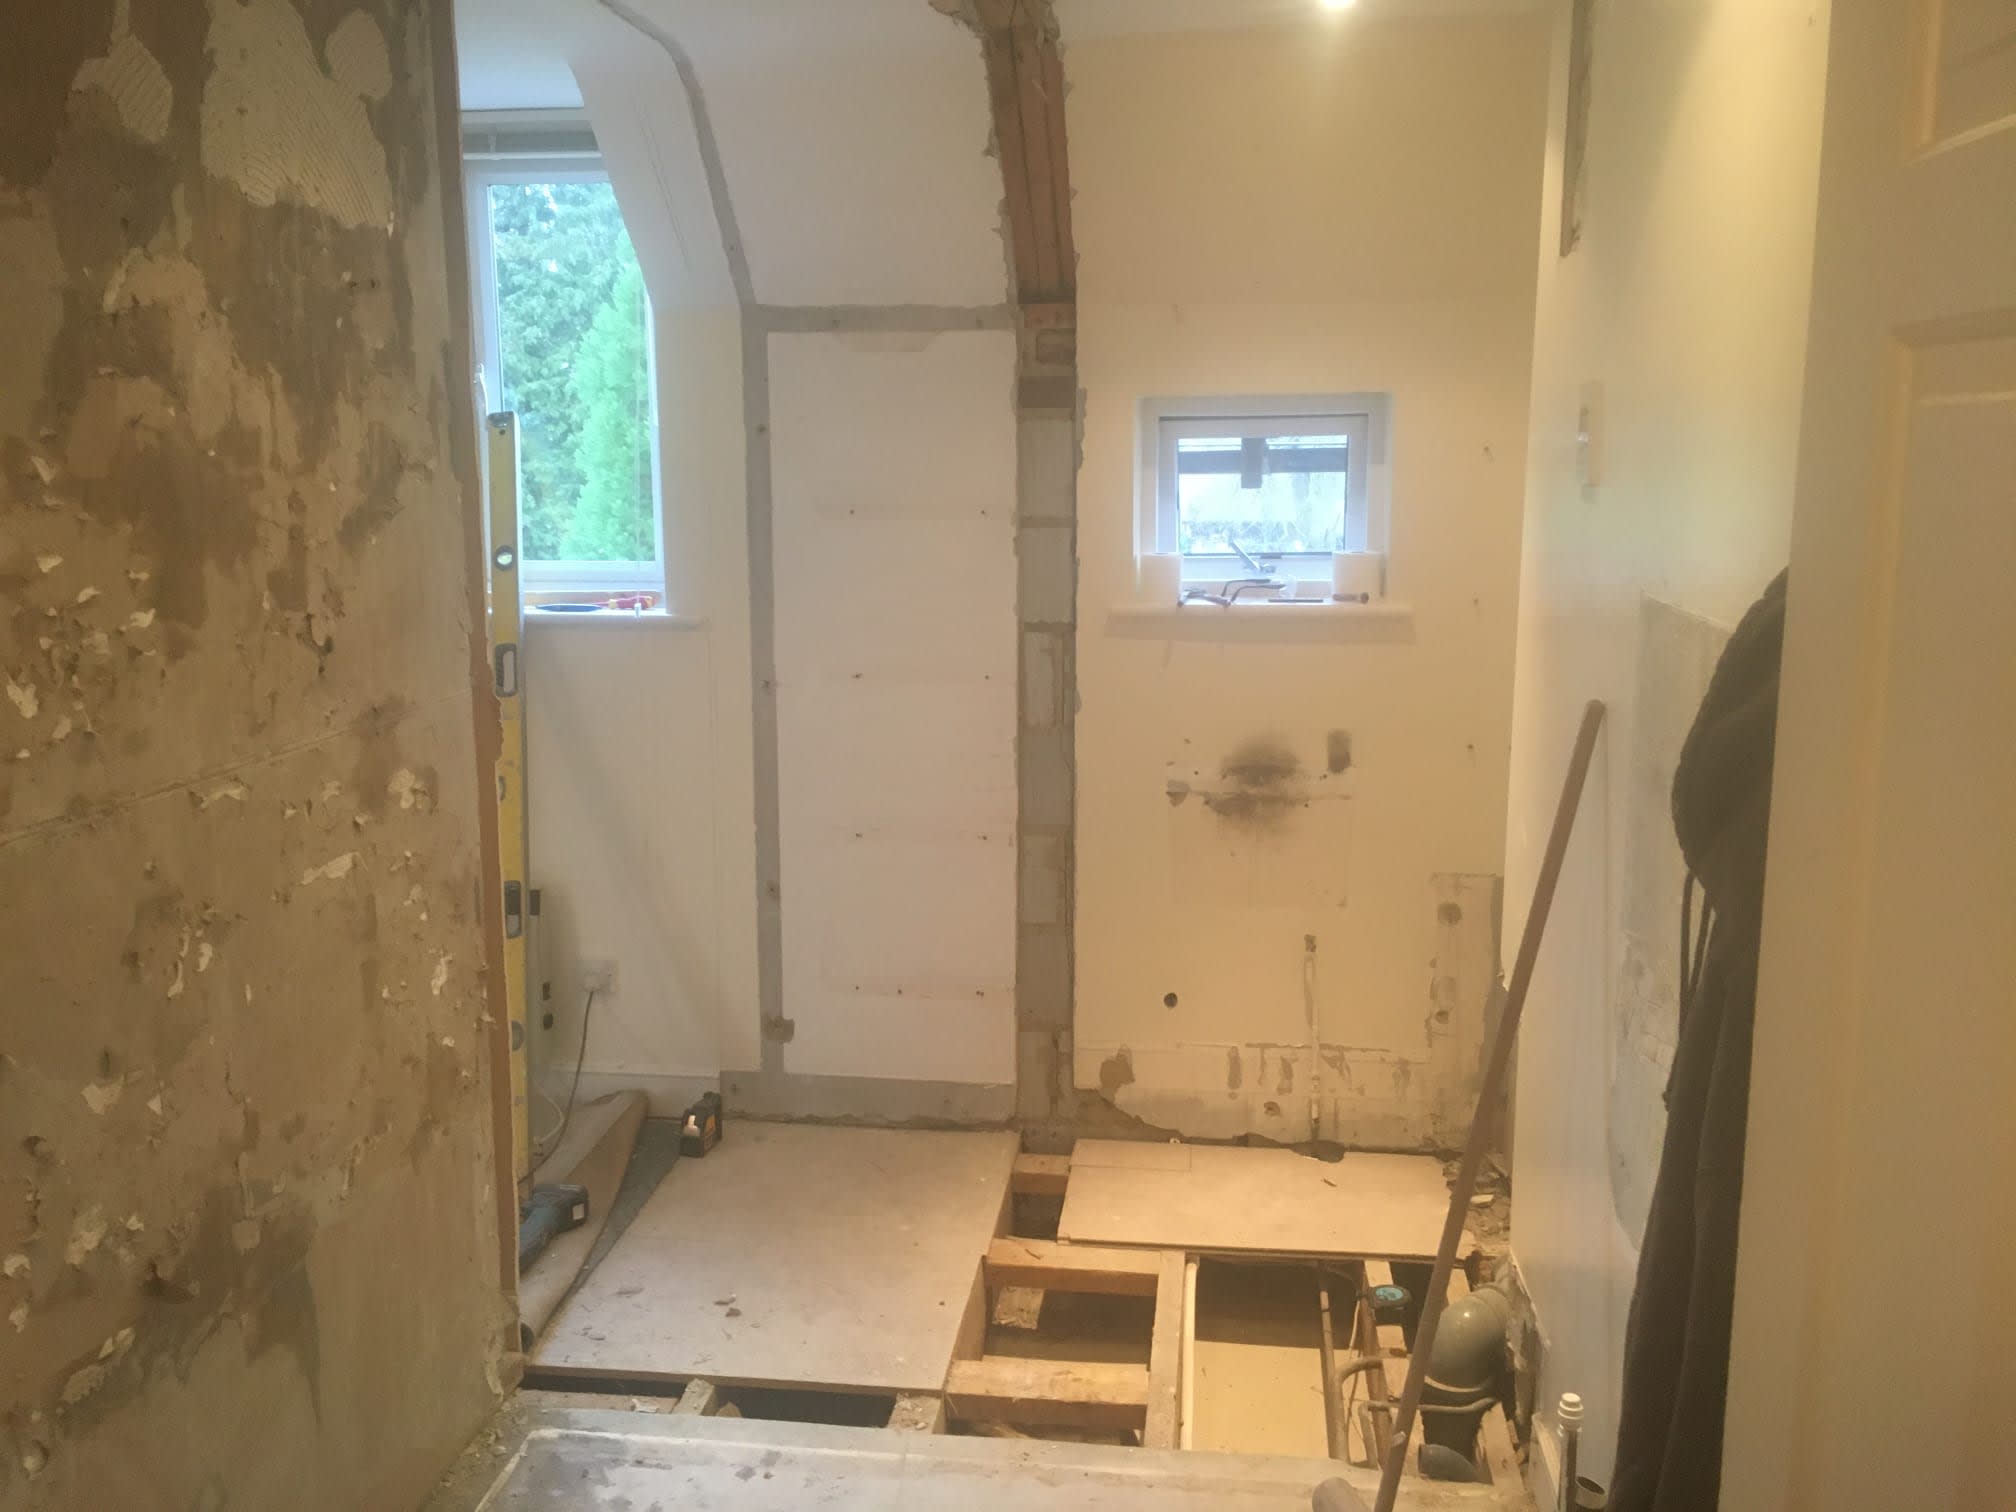 Images Phil Ratcliffe Home Improvements